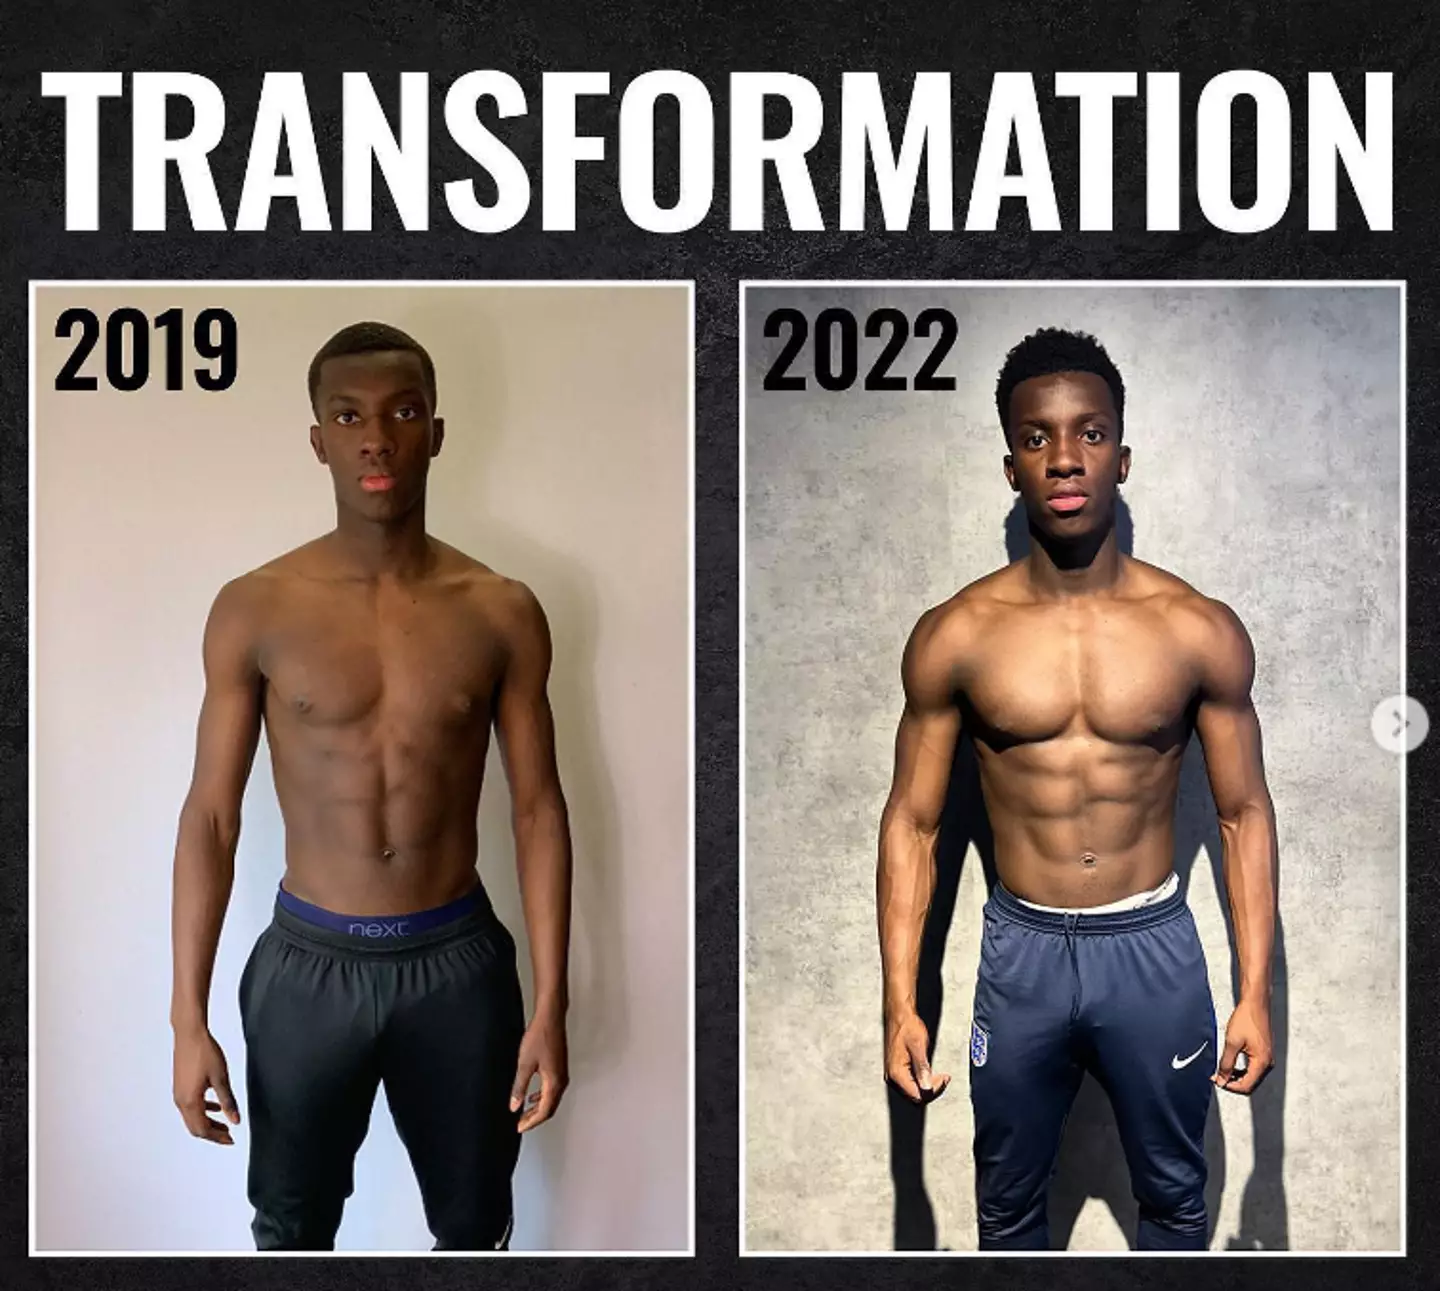 Eddie Nketiah's body transformation. Image: Athletic Development Club